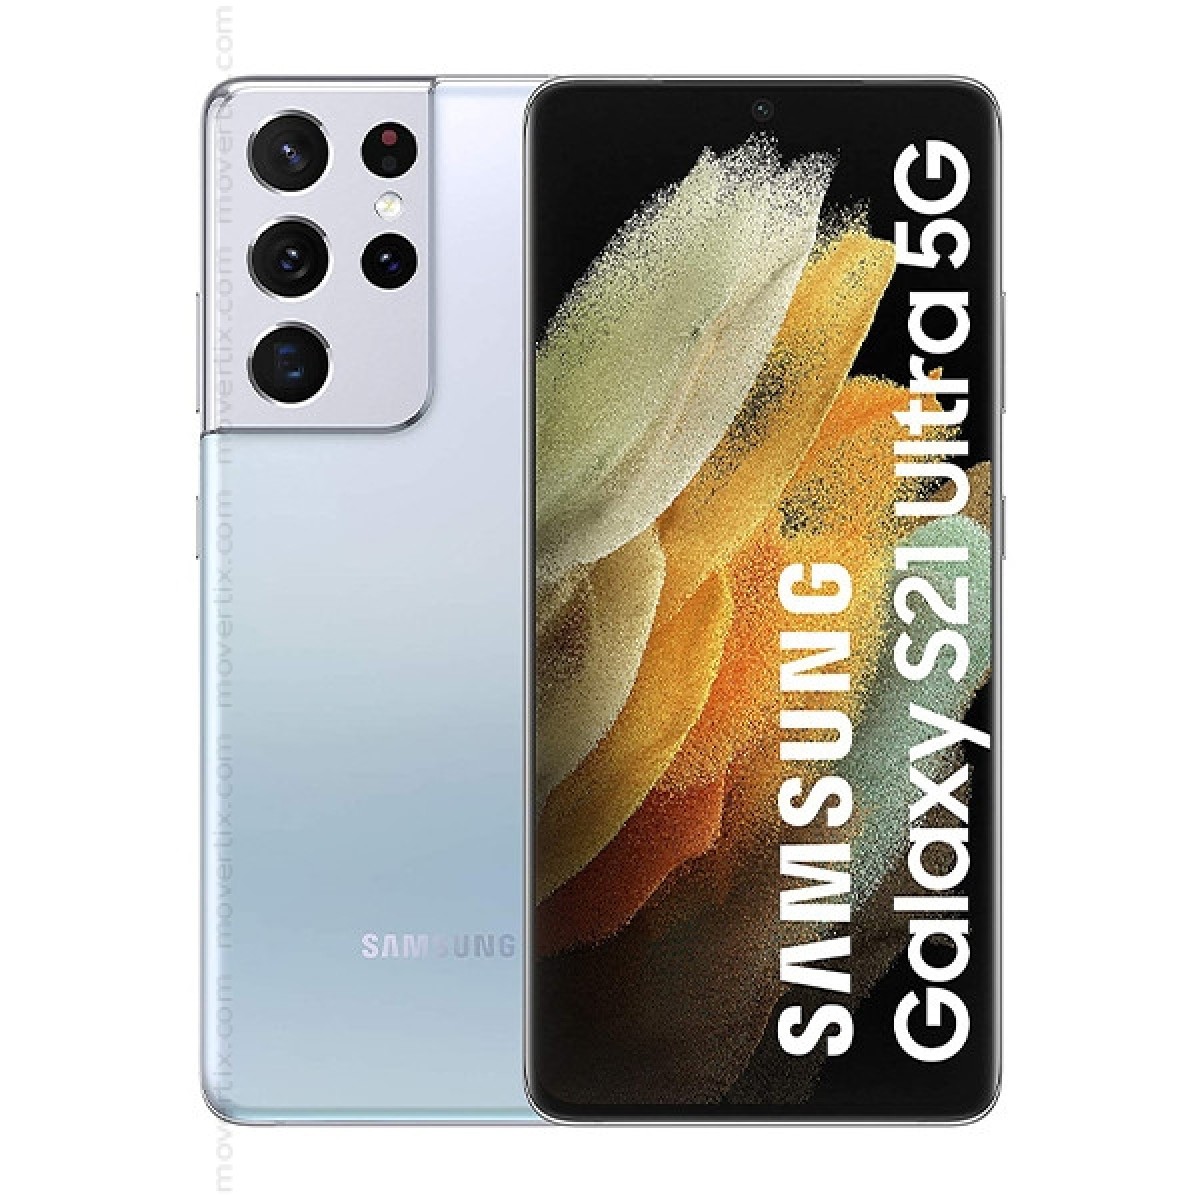 Samsung Galaxy S21 Ultra 5G Phantom Silver 128GB and 12GB RAM SM-G998B  (8806090887123) Movertix Mobile Phones Shop